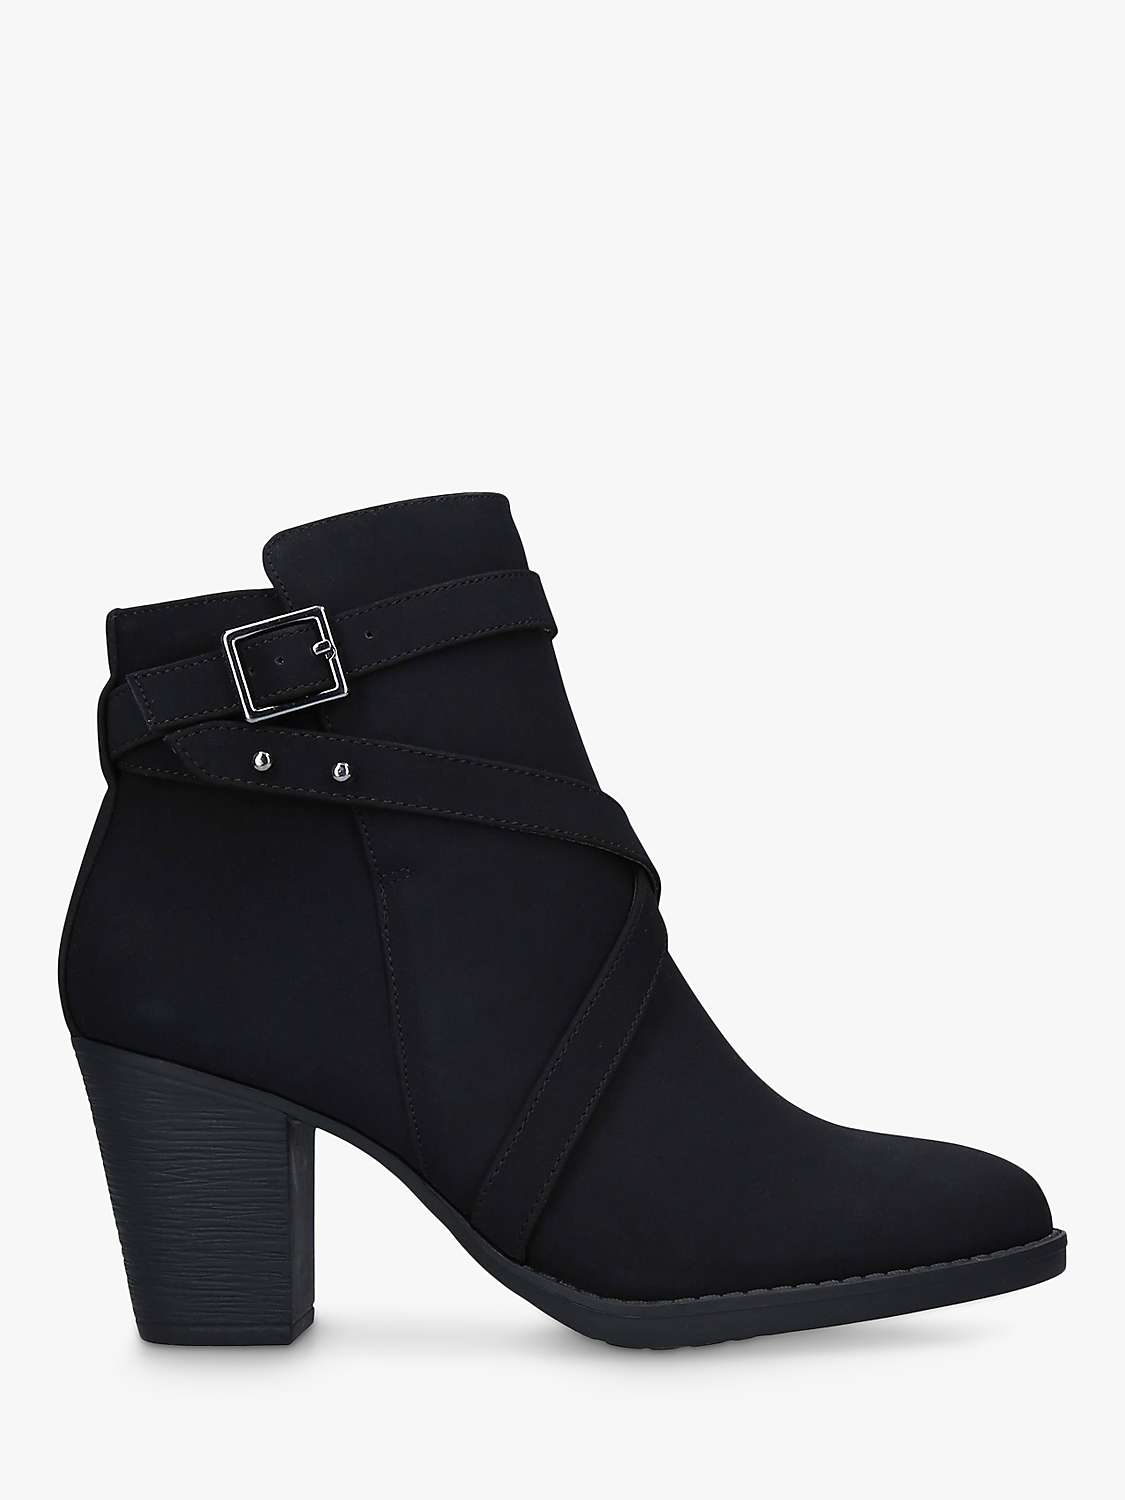 Buy Carvela Comfort Tara Block Heel Ankle Boots, Black Online at johnlewis.com